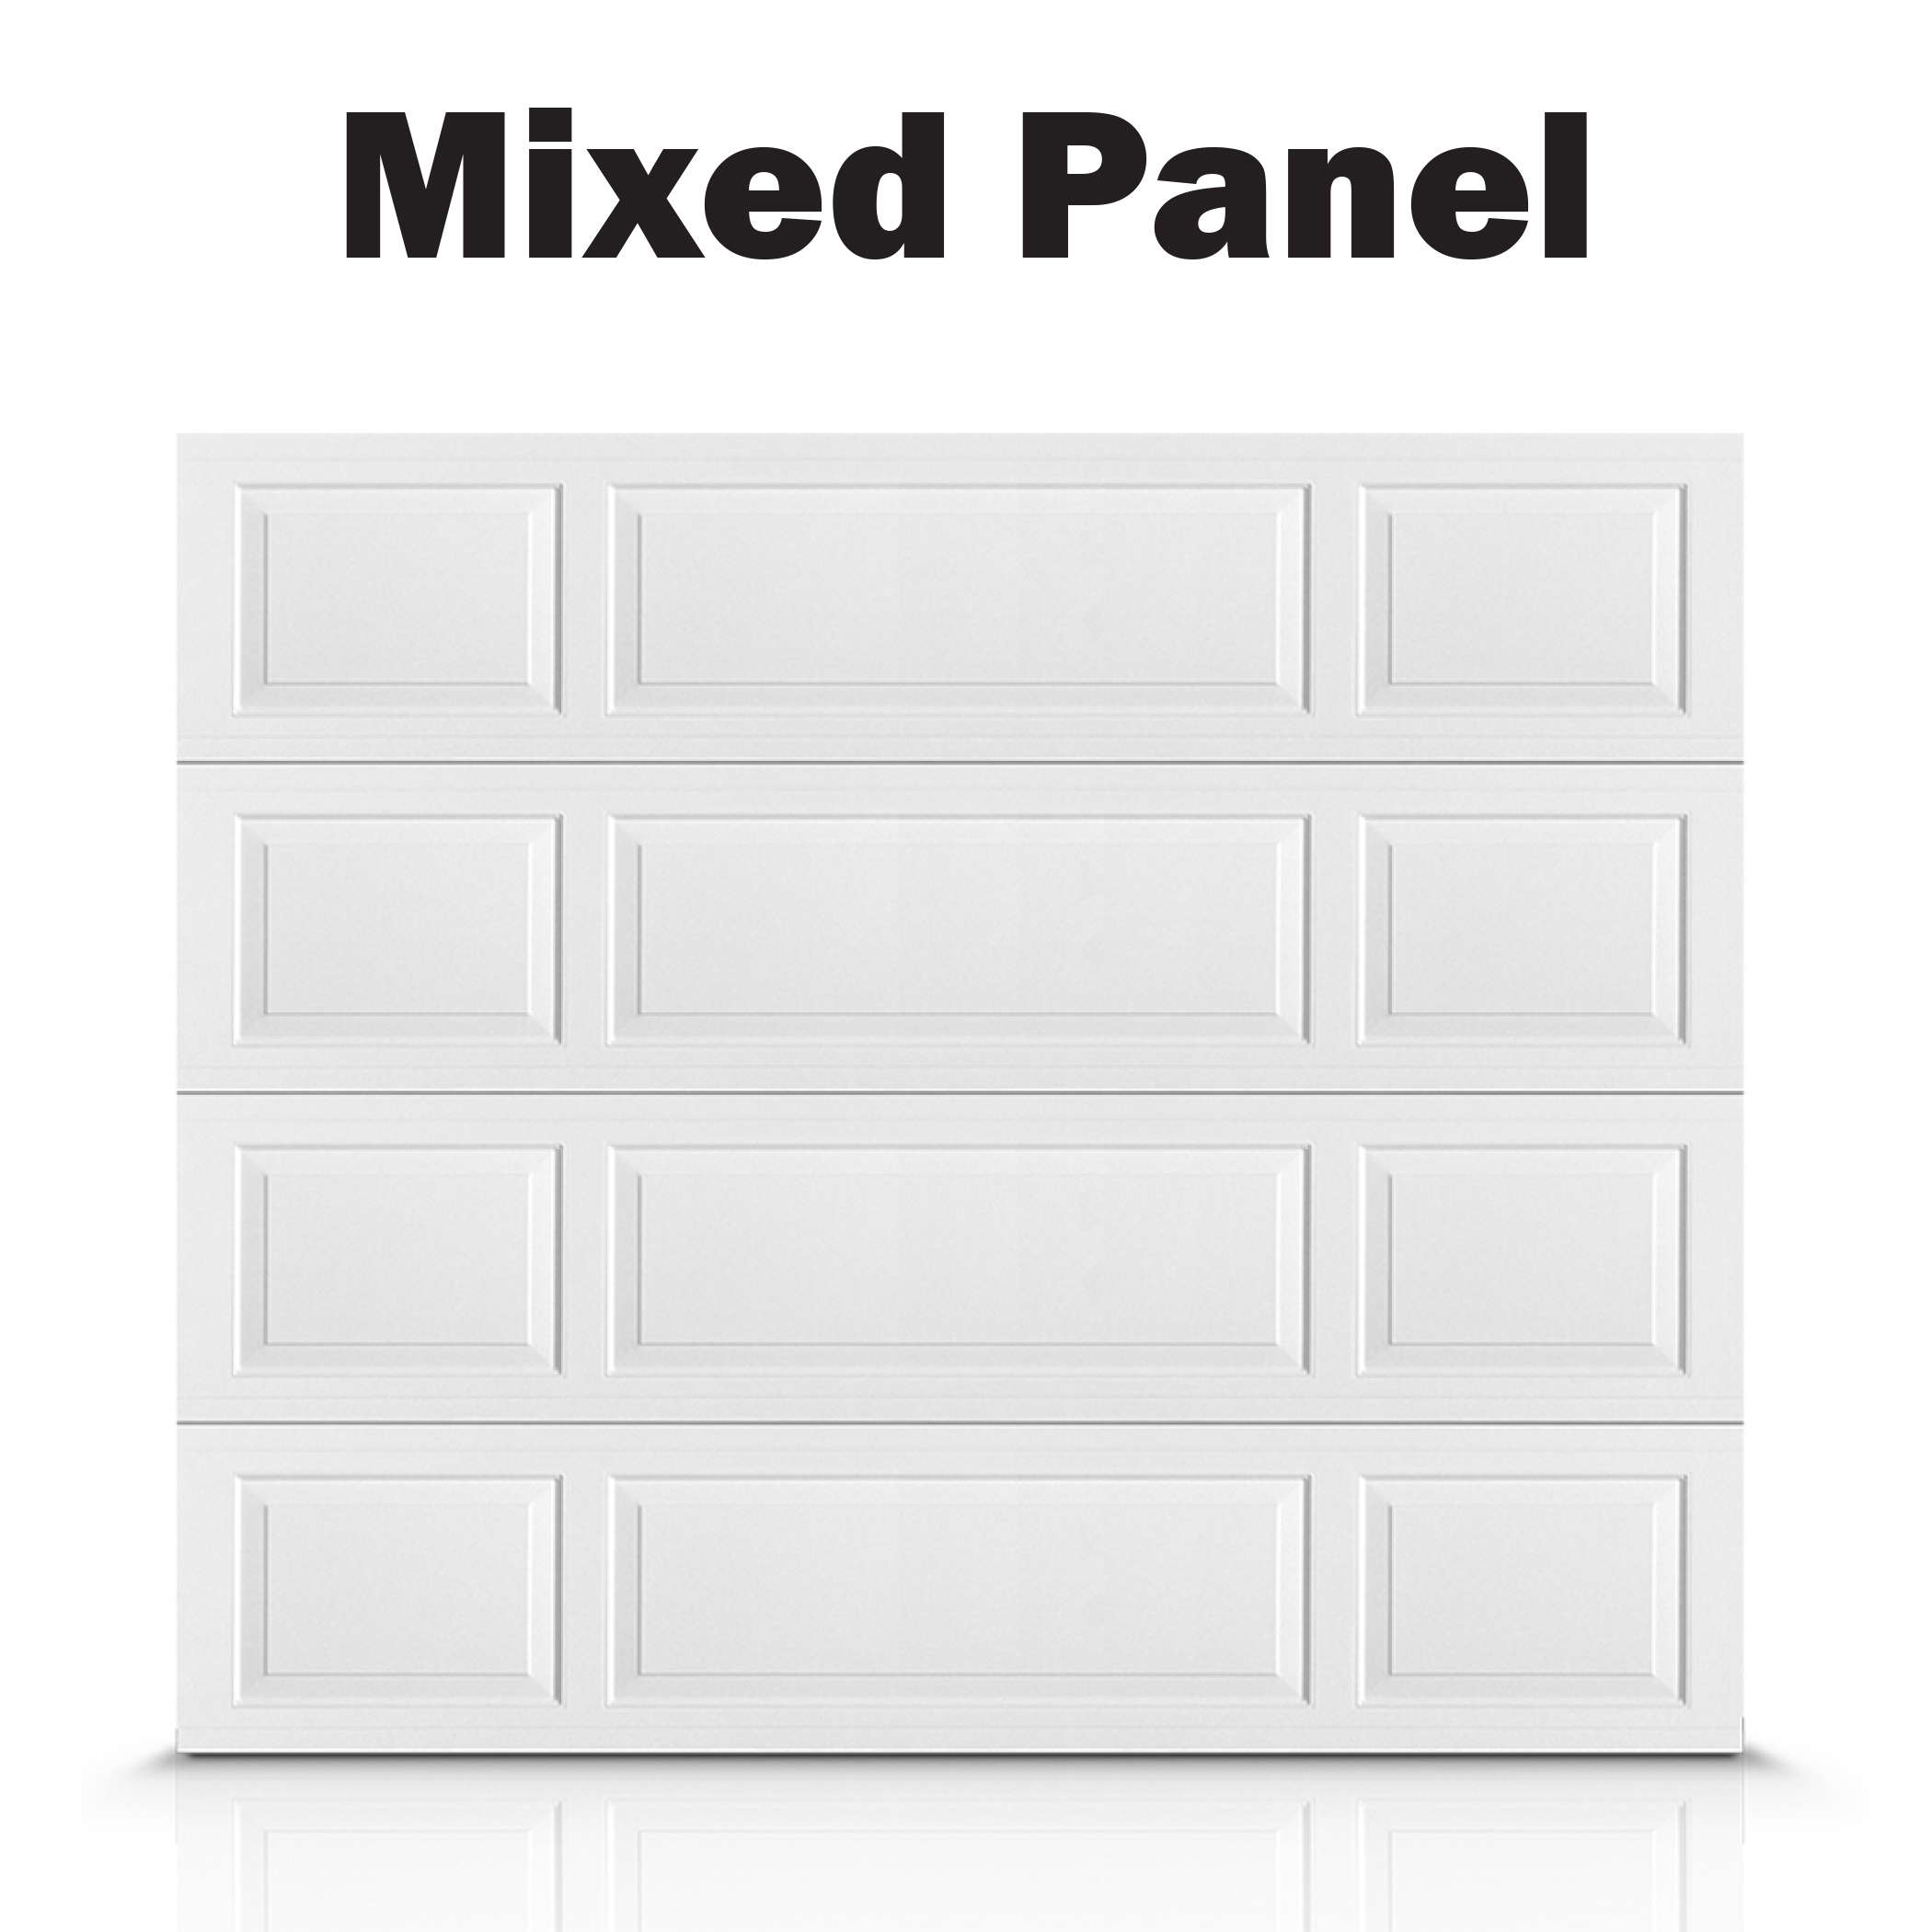 Mixed Panel - Premium.jpg